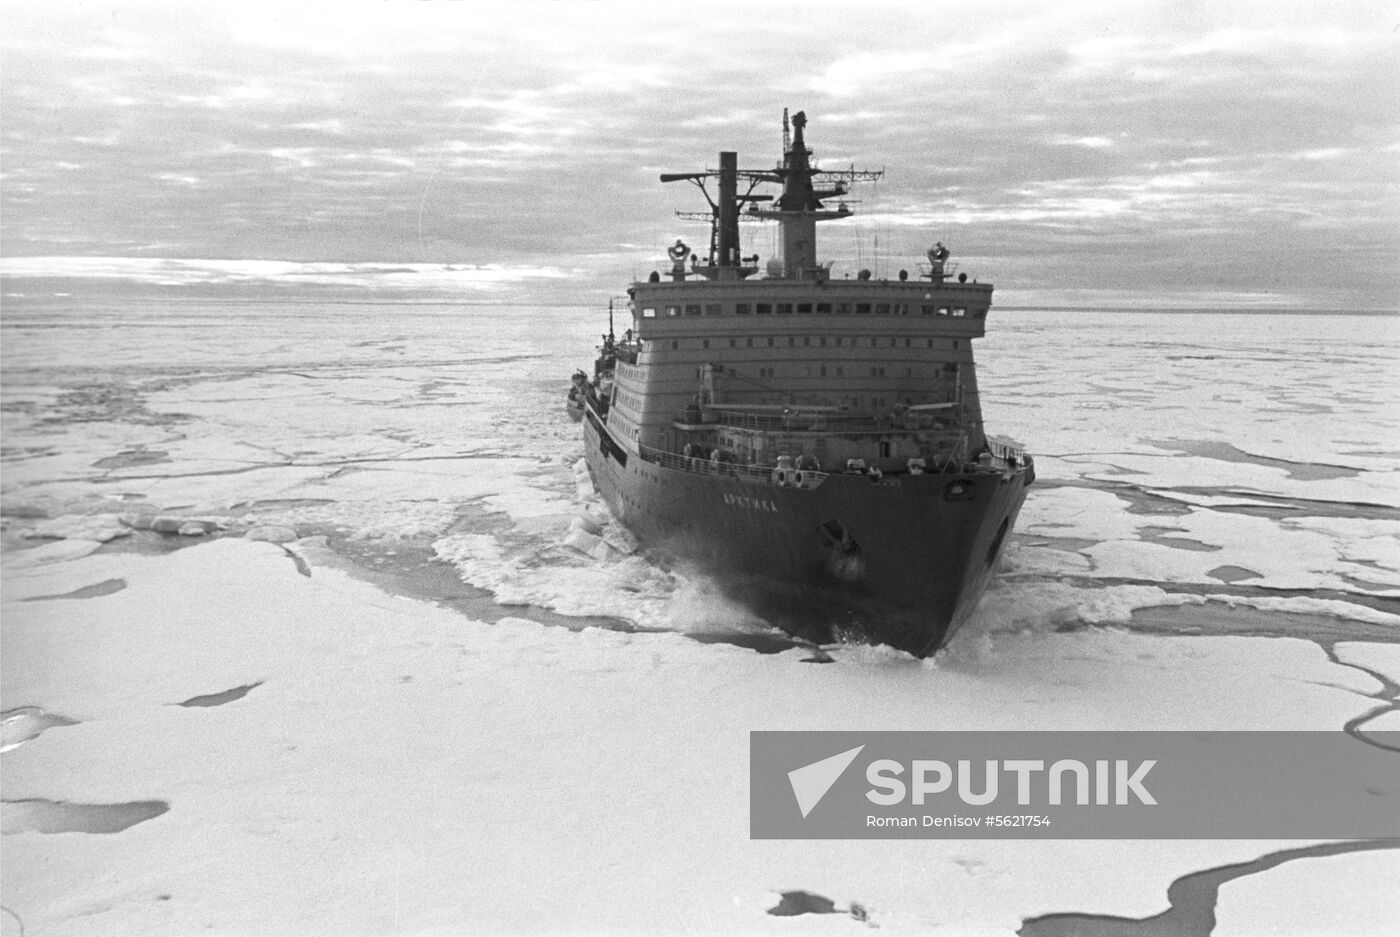 The Arktika nuclear-powered icebreaker